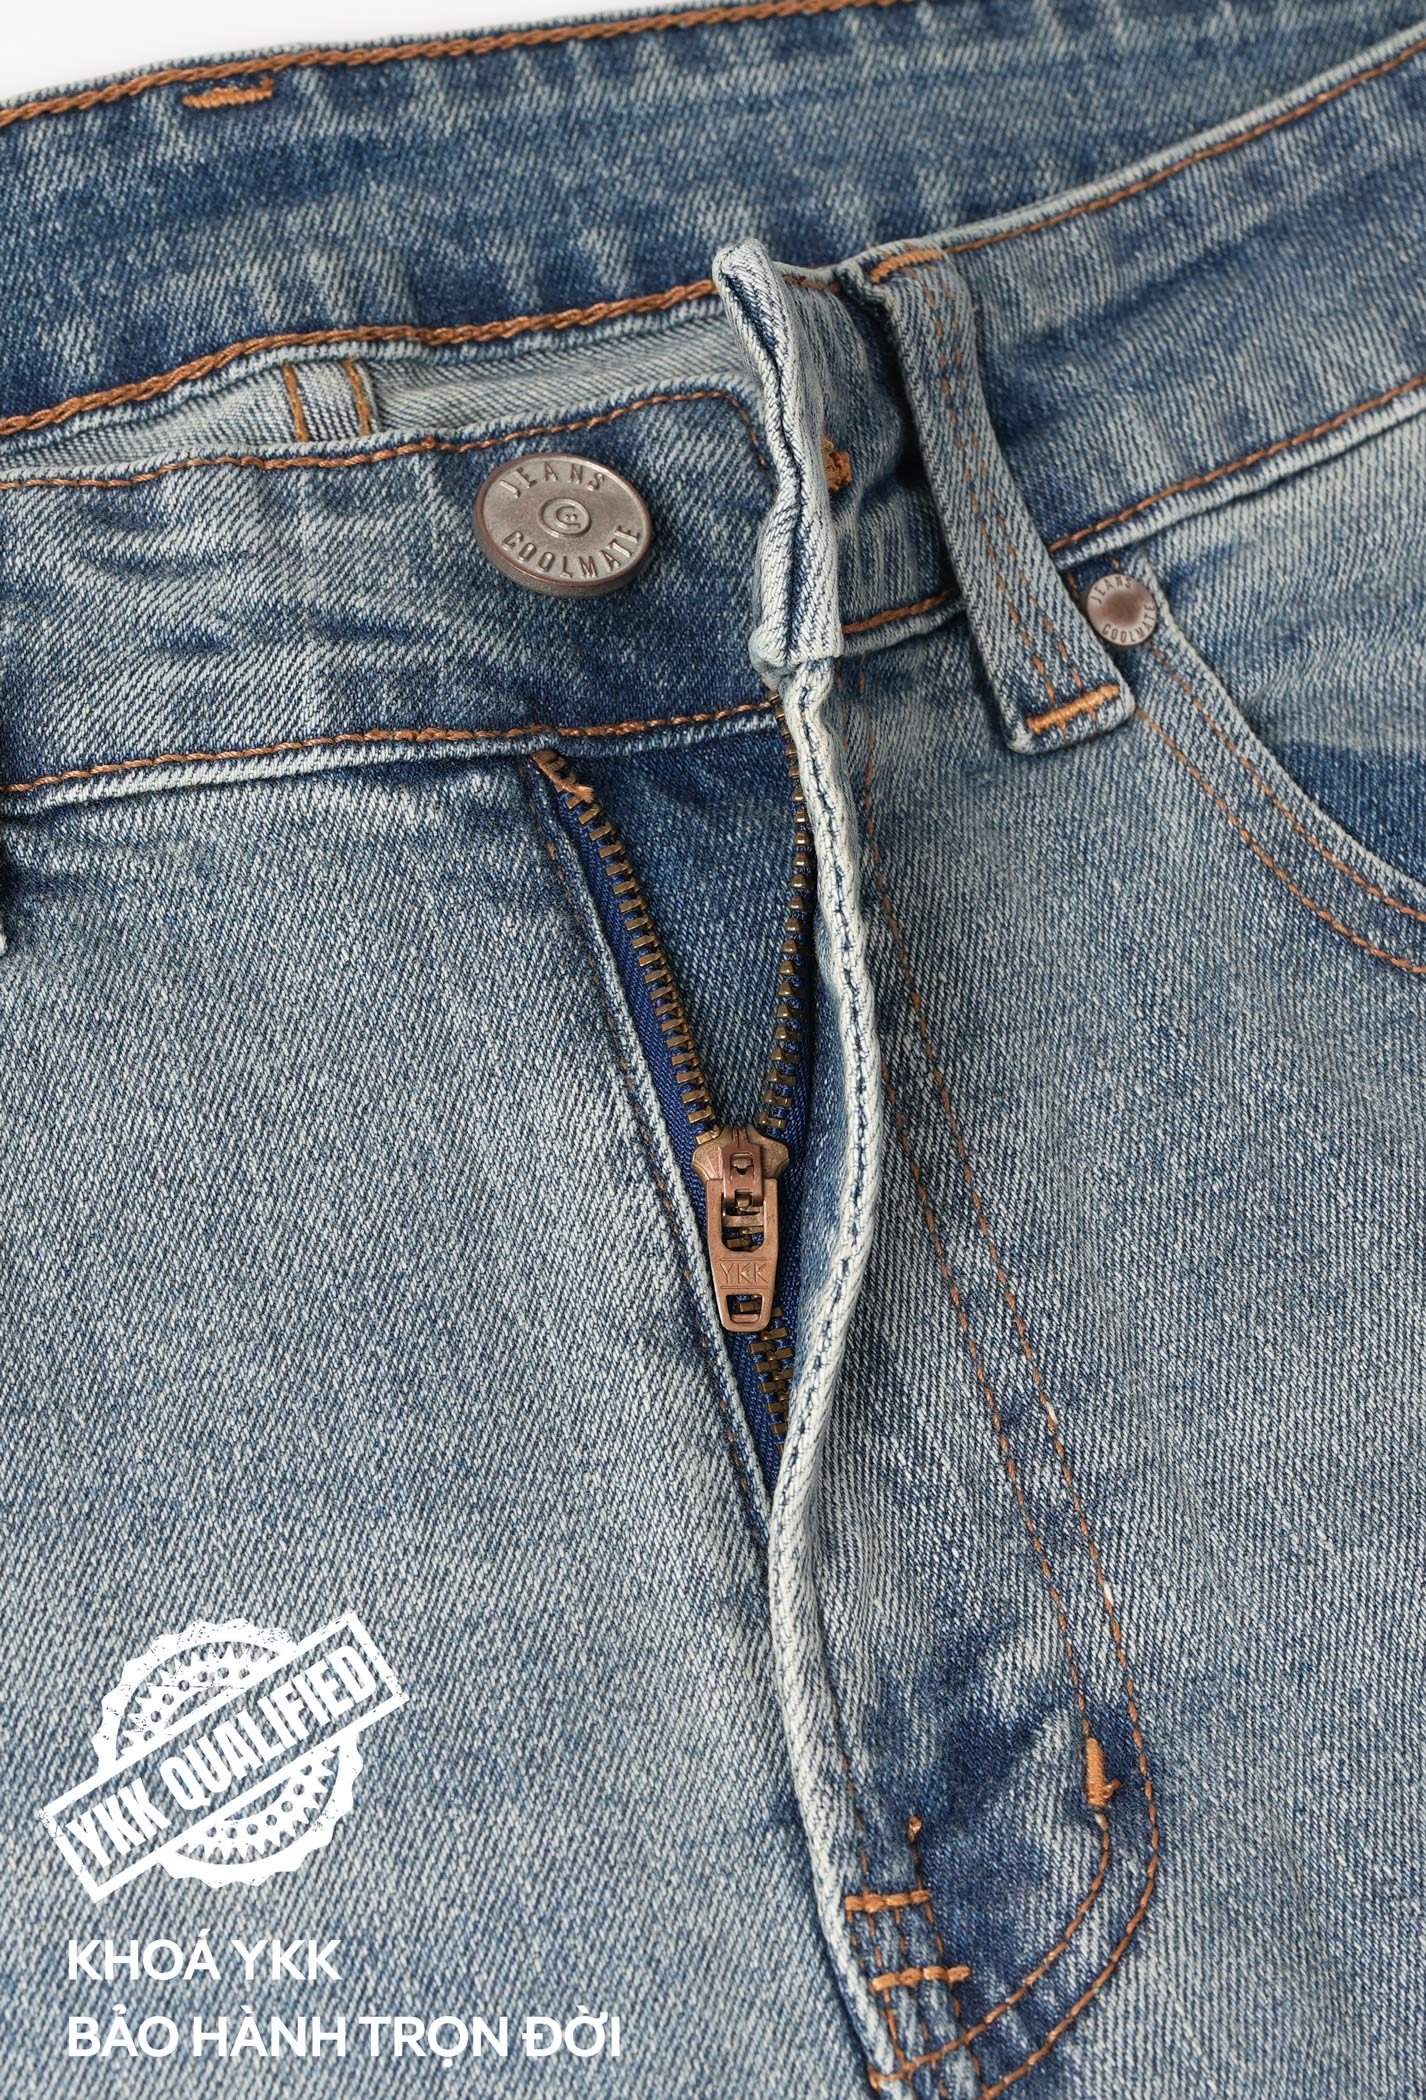 OUTLET - Quần Jeans Basic Slim V2 Xanh nhạt 5